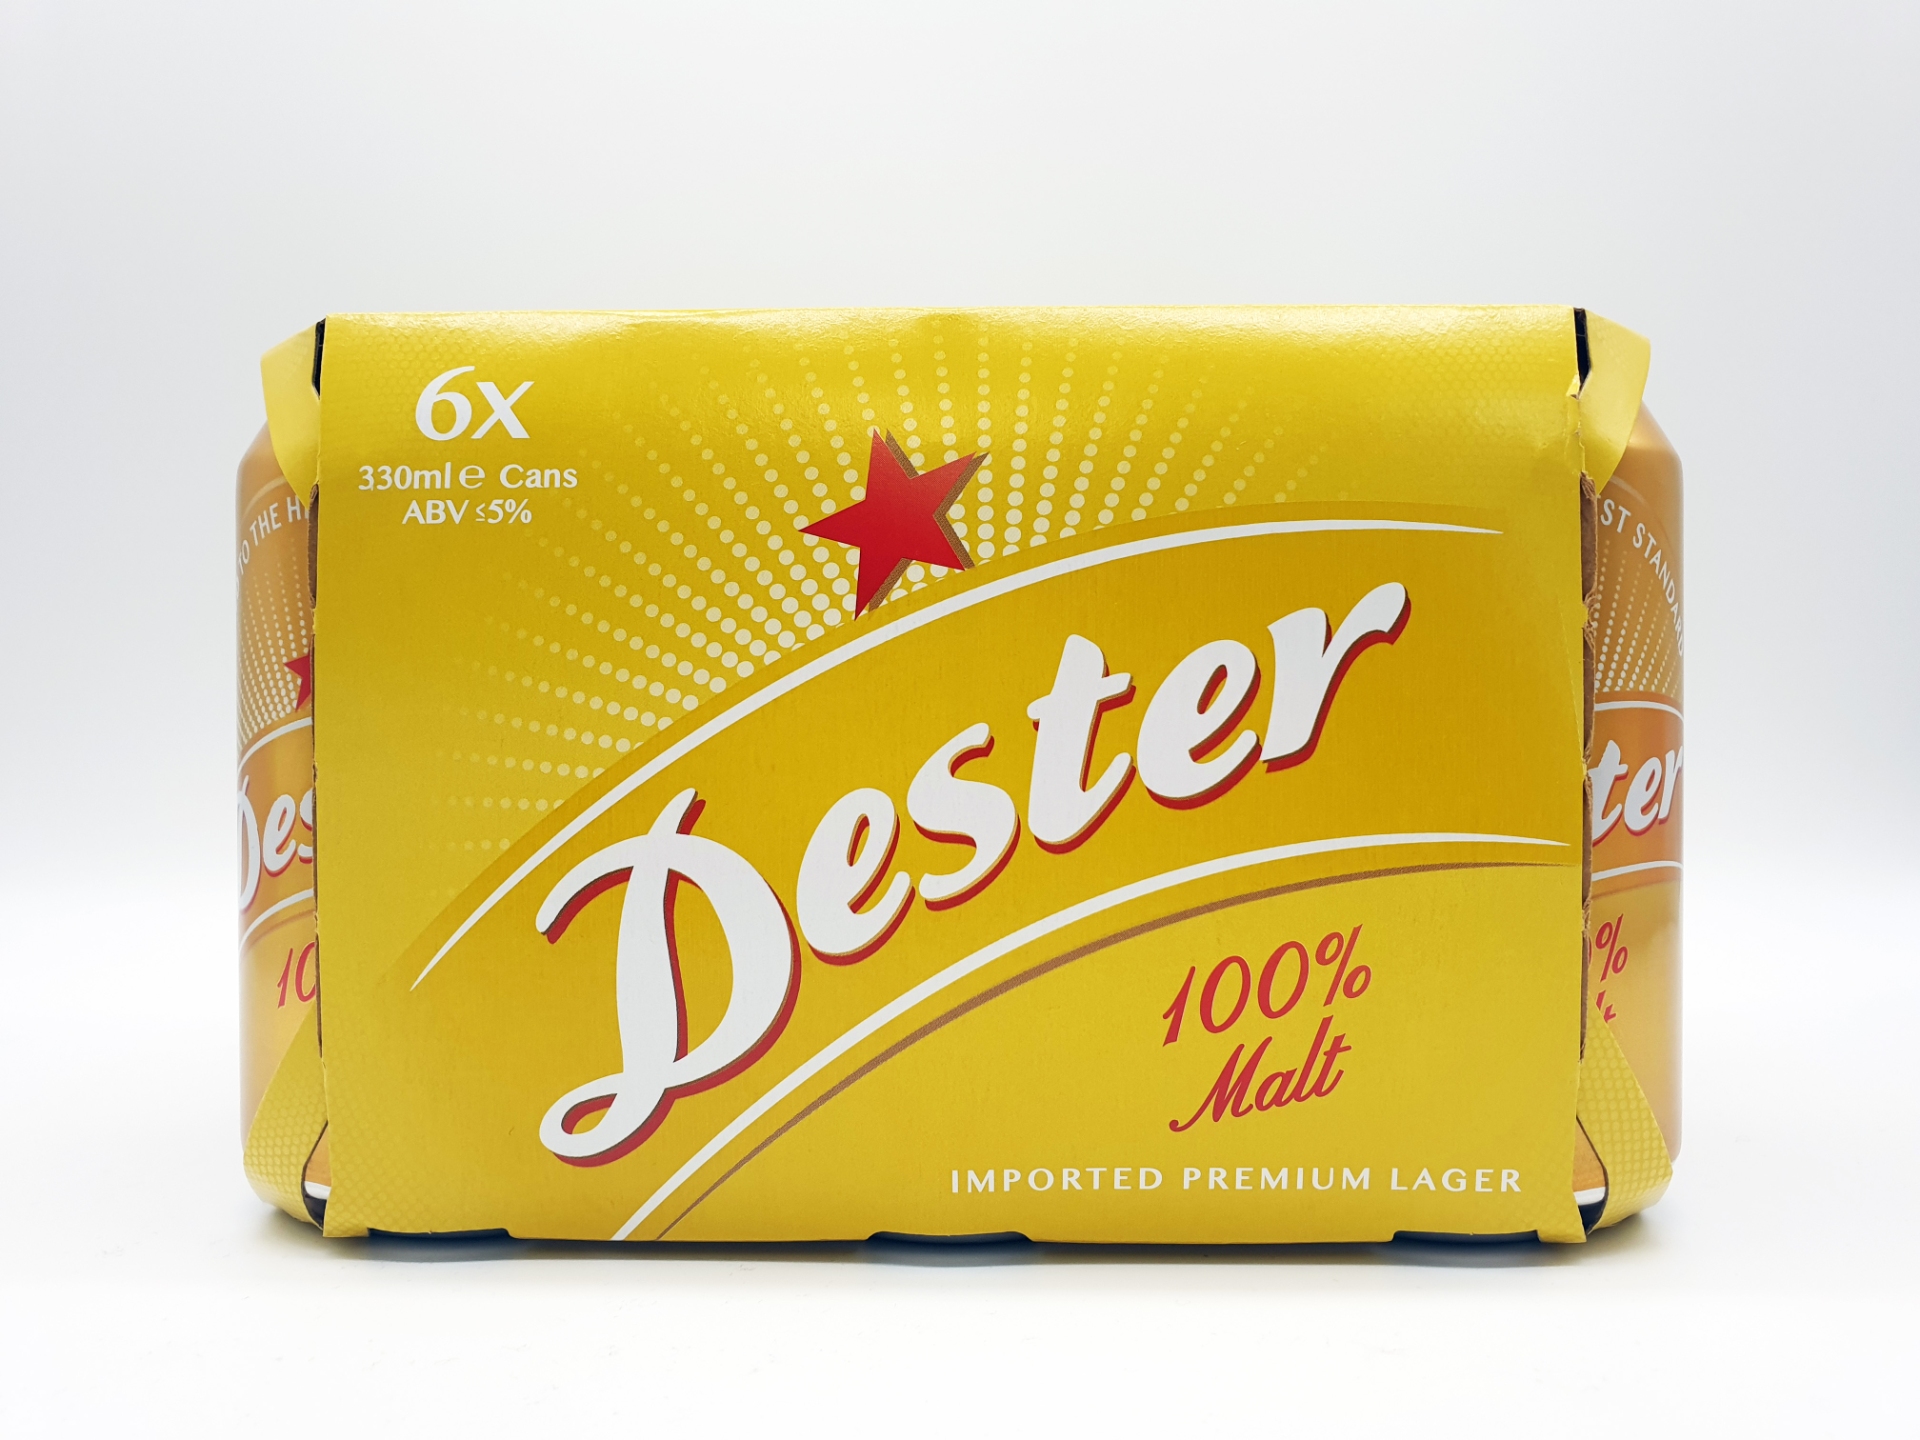 Dester Gold 100% Malt Can Beer (24 cans x 330ml)